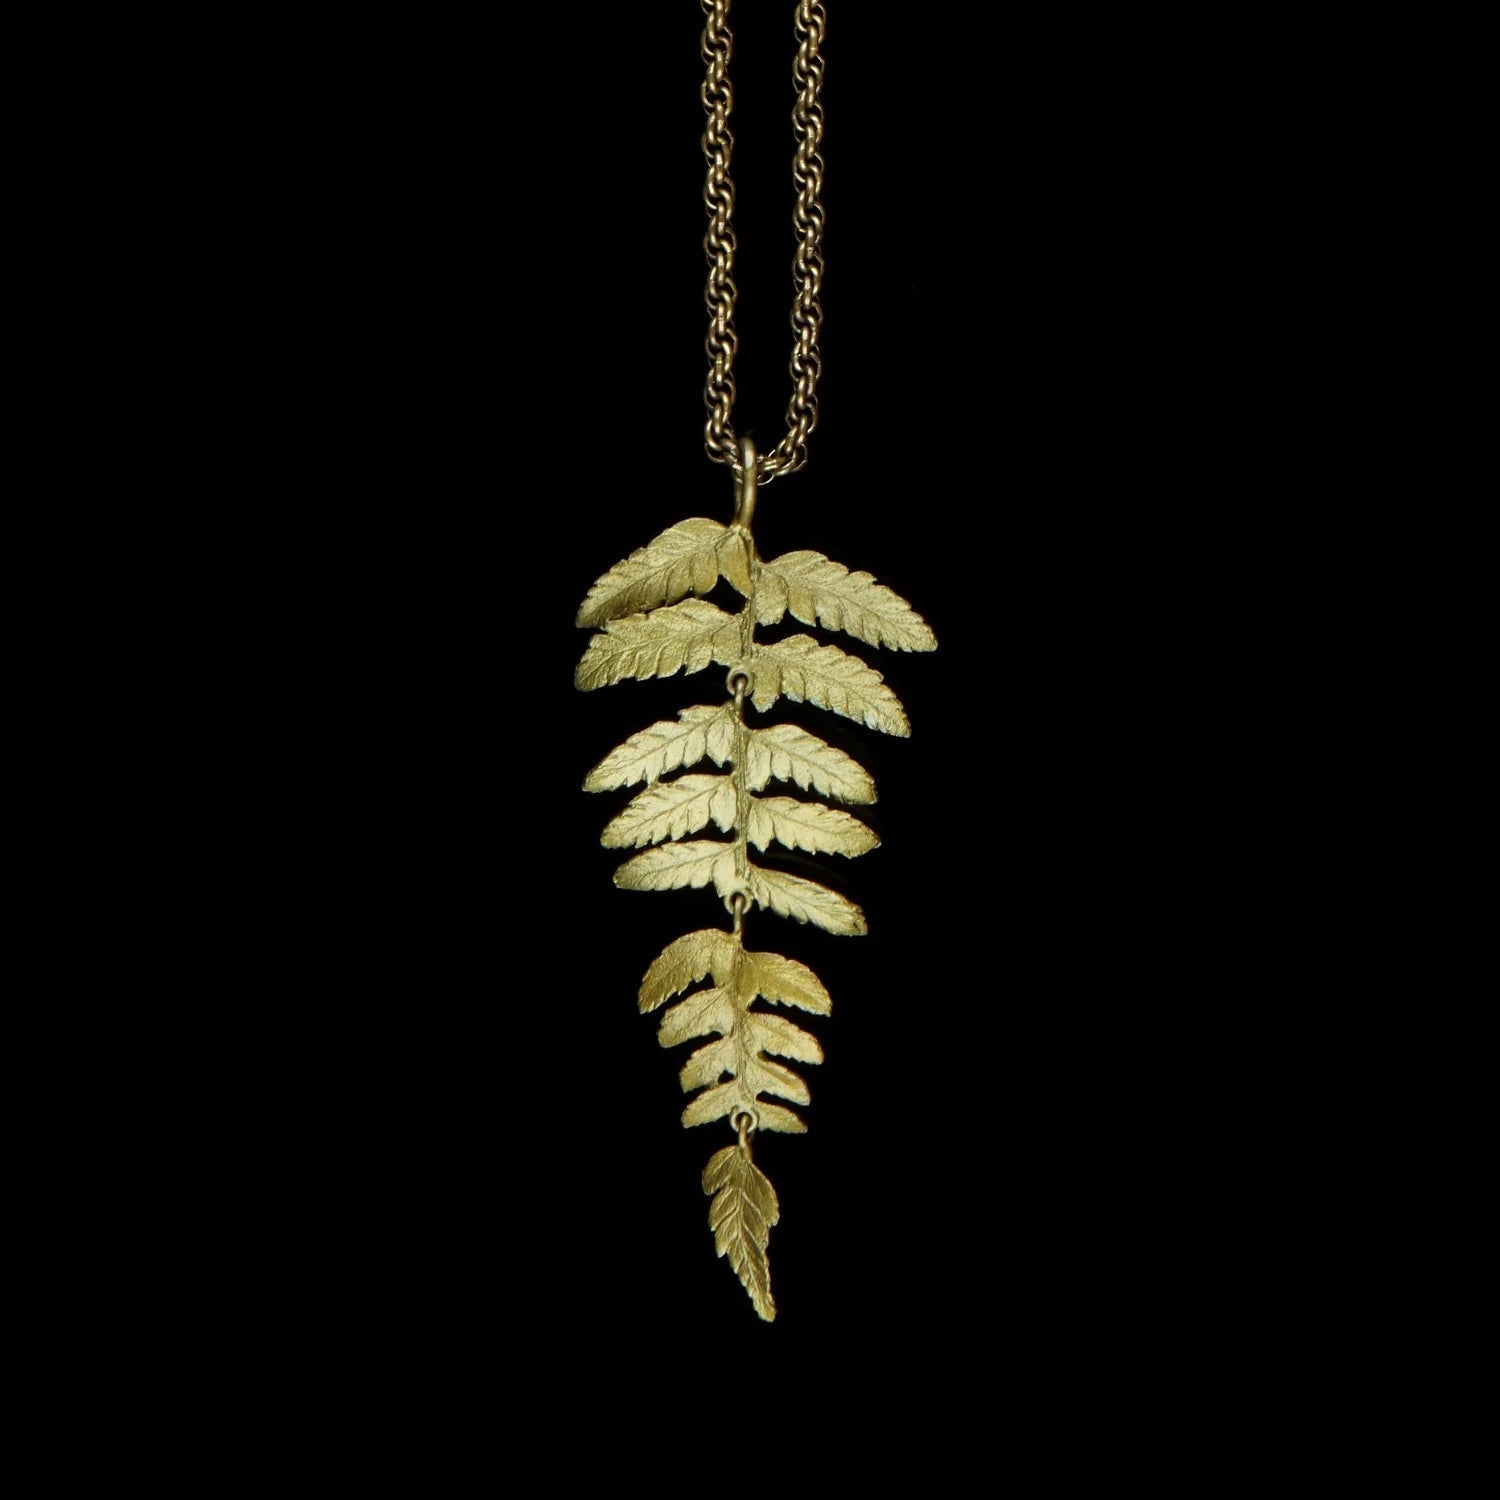 Fern Long Necklace - The Nancy Smillie Shop - Art, Jewellery & Designer Gifts Glasgow